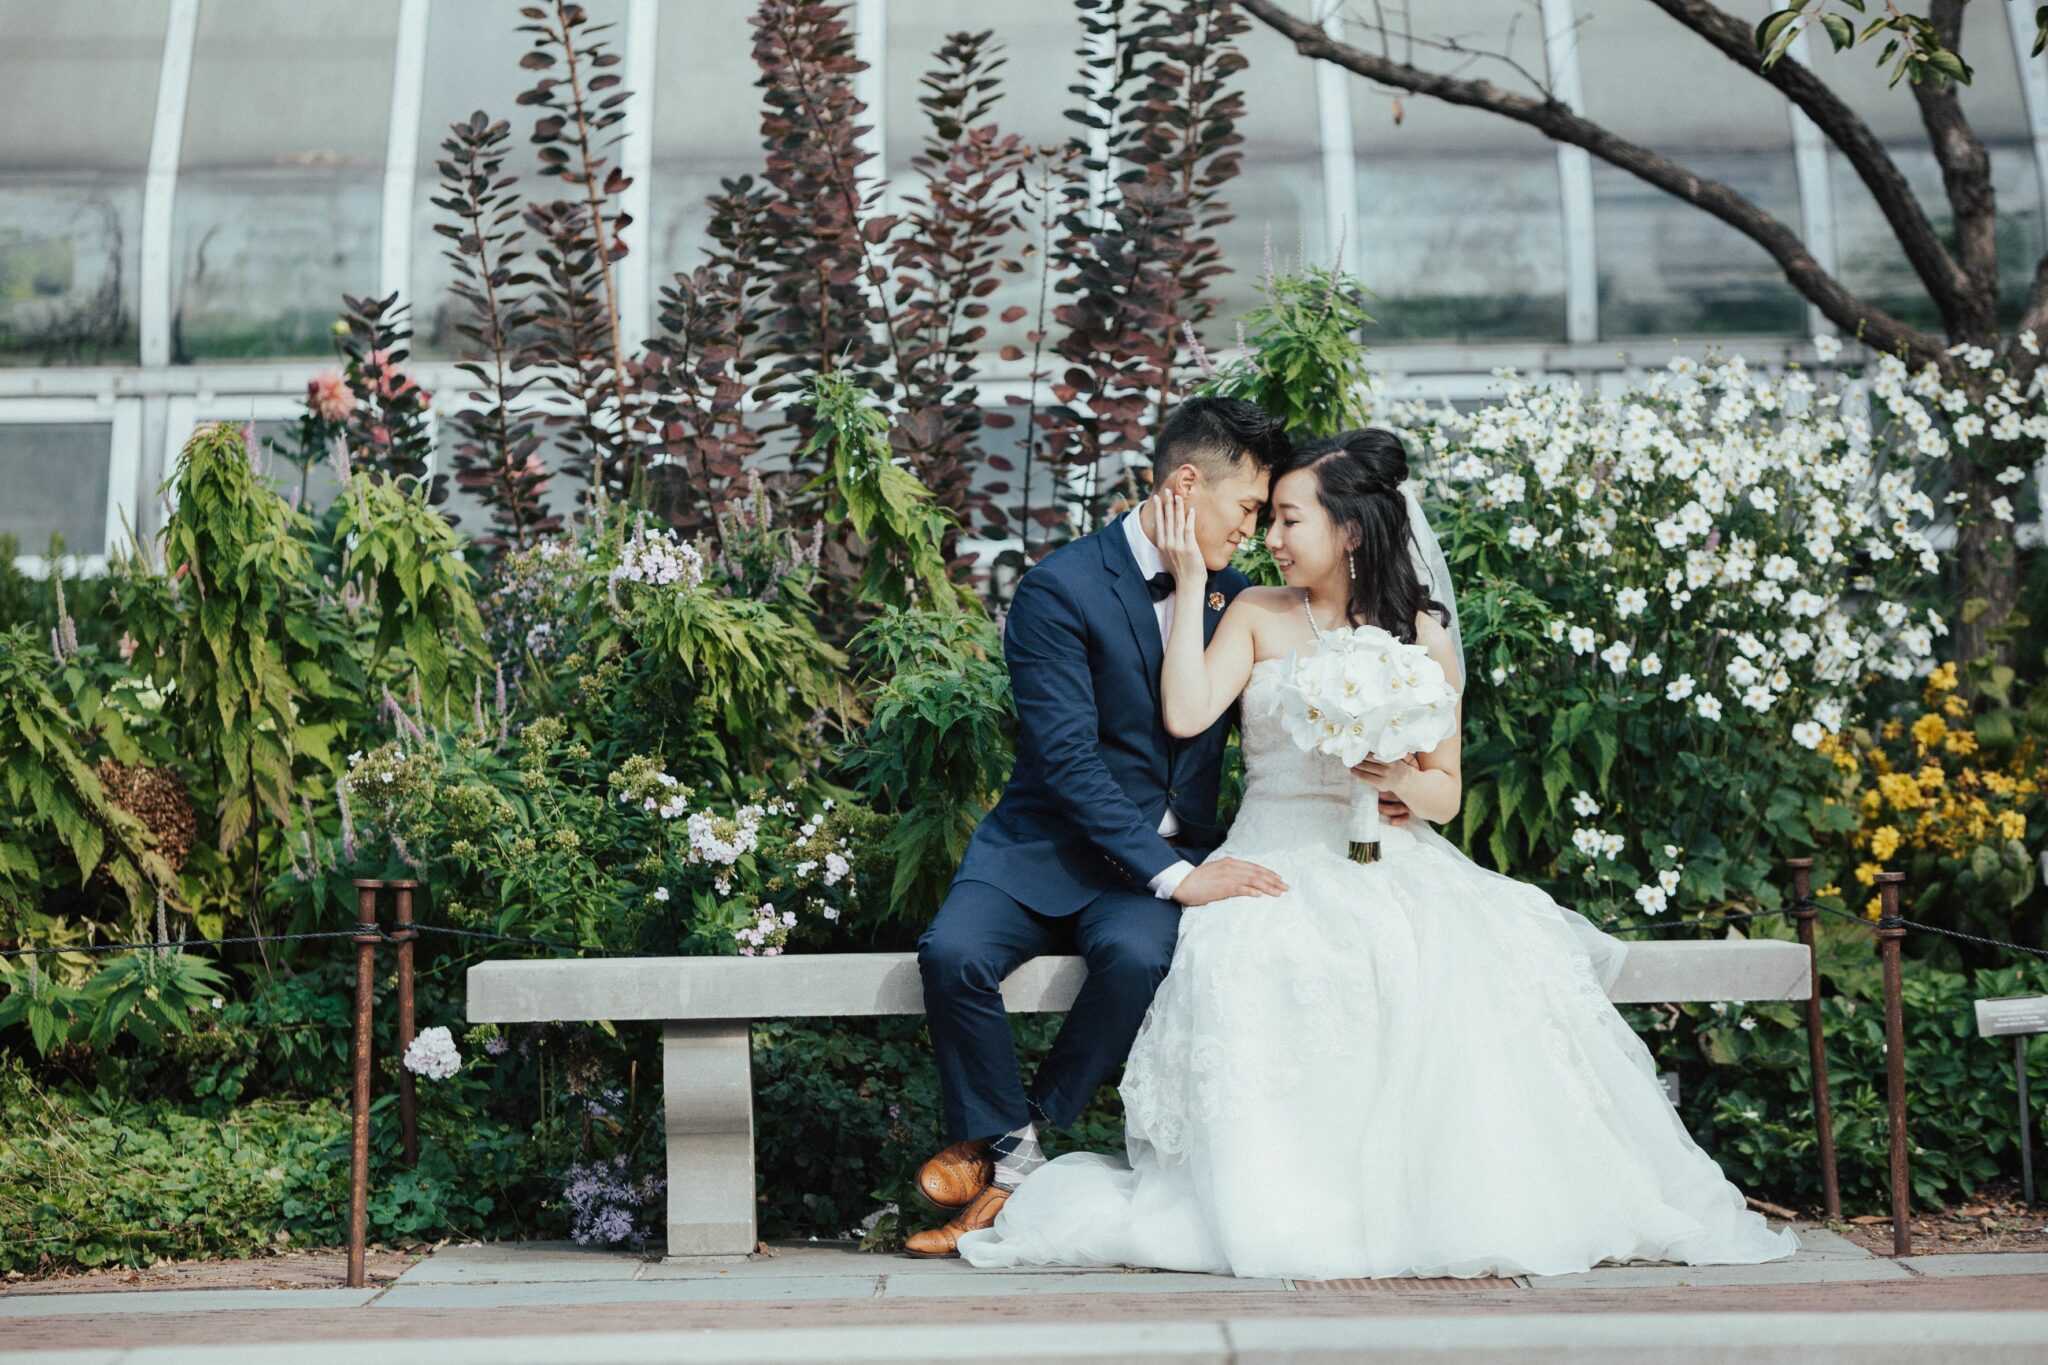 Wedding - Traditional Chinese Wedding | Wedding Photography and Wedding Videography